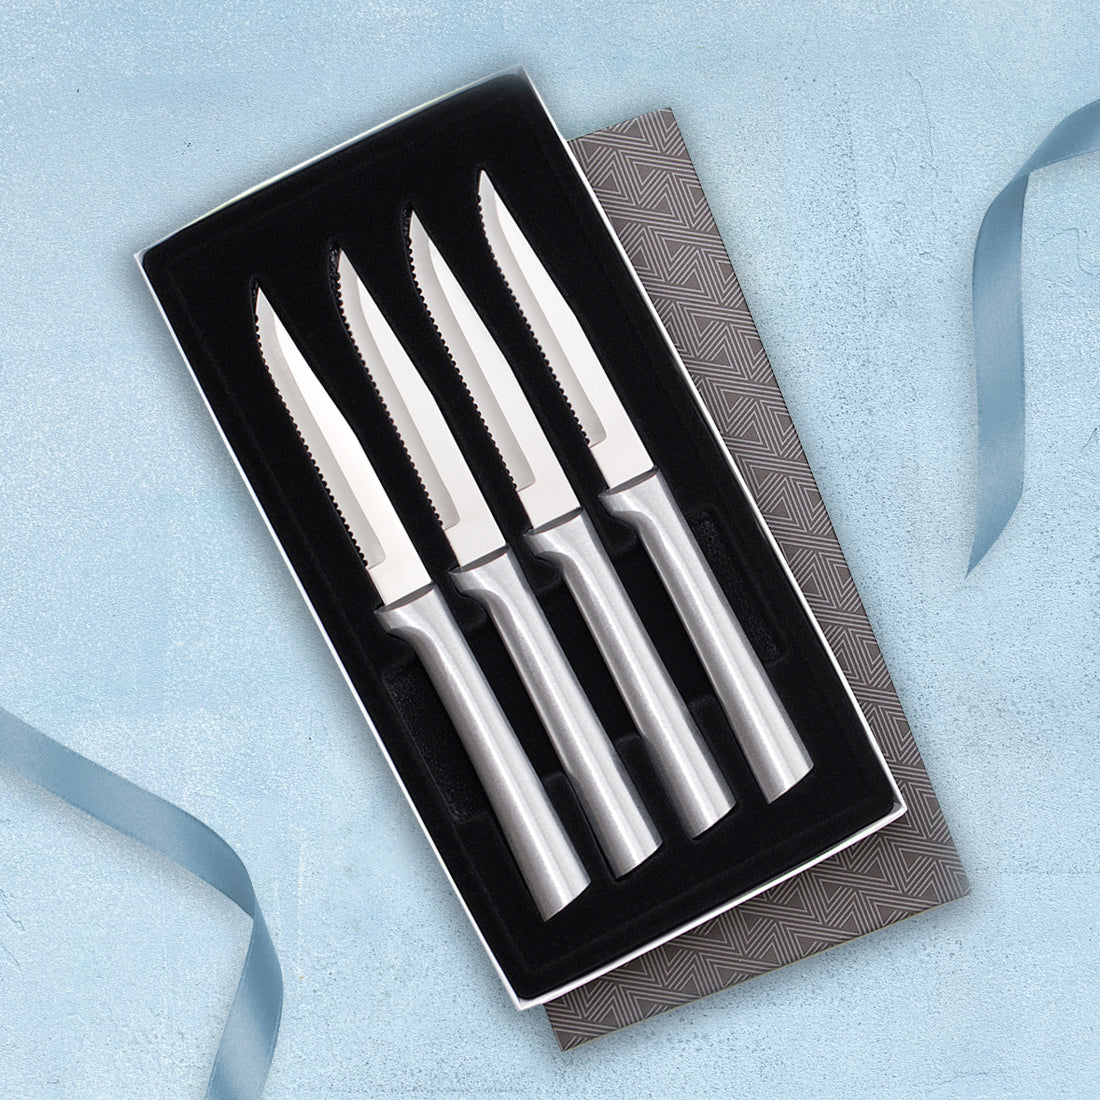 Rada Cutlery G24s 4-Serrated Steak Knives Gift Set